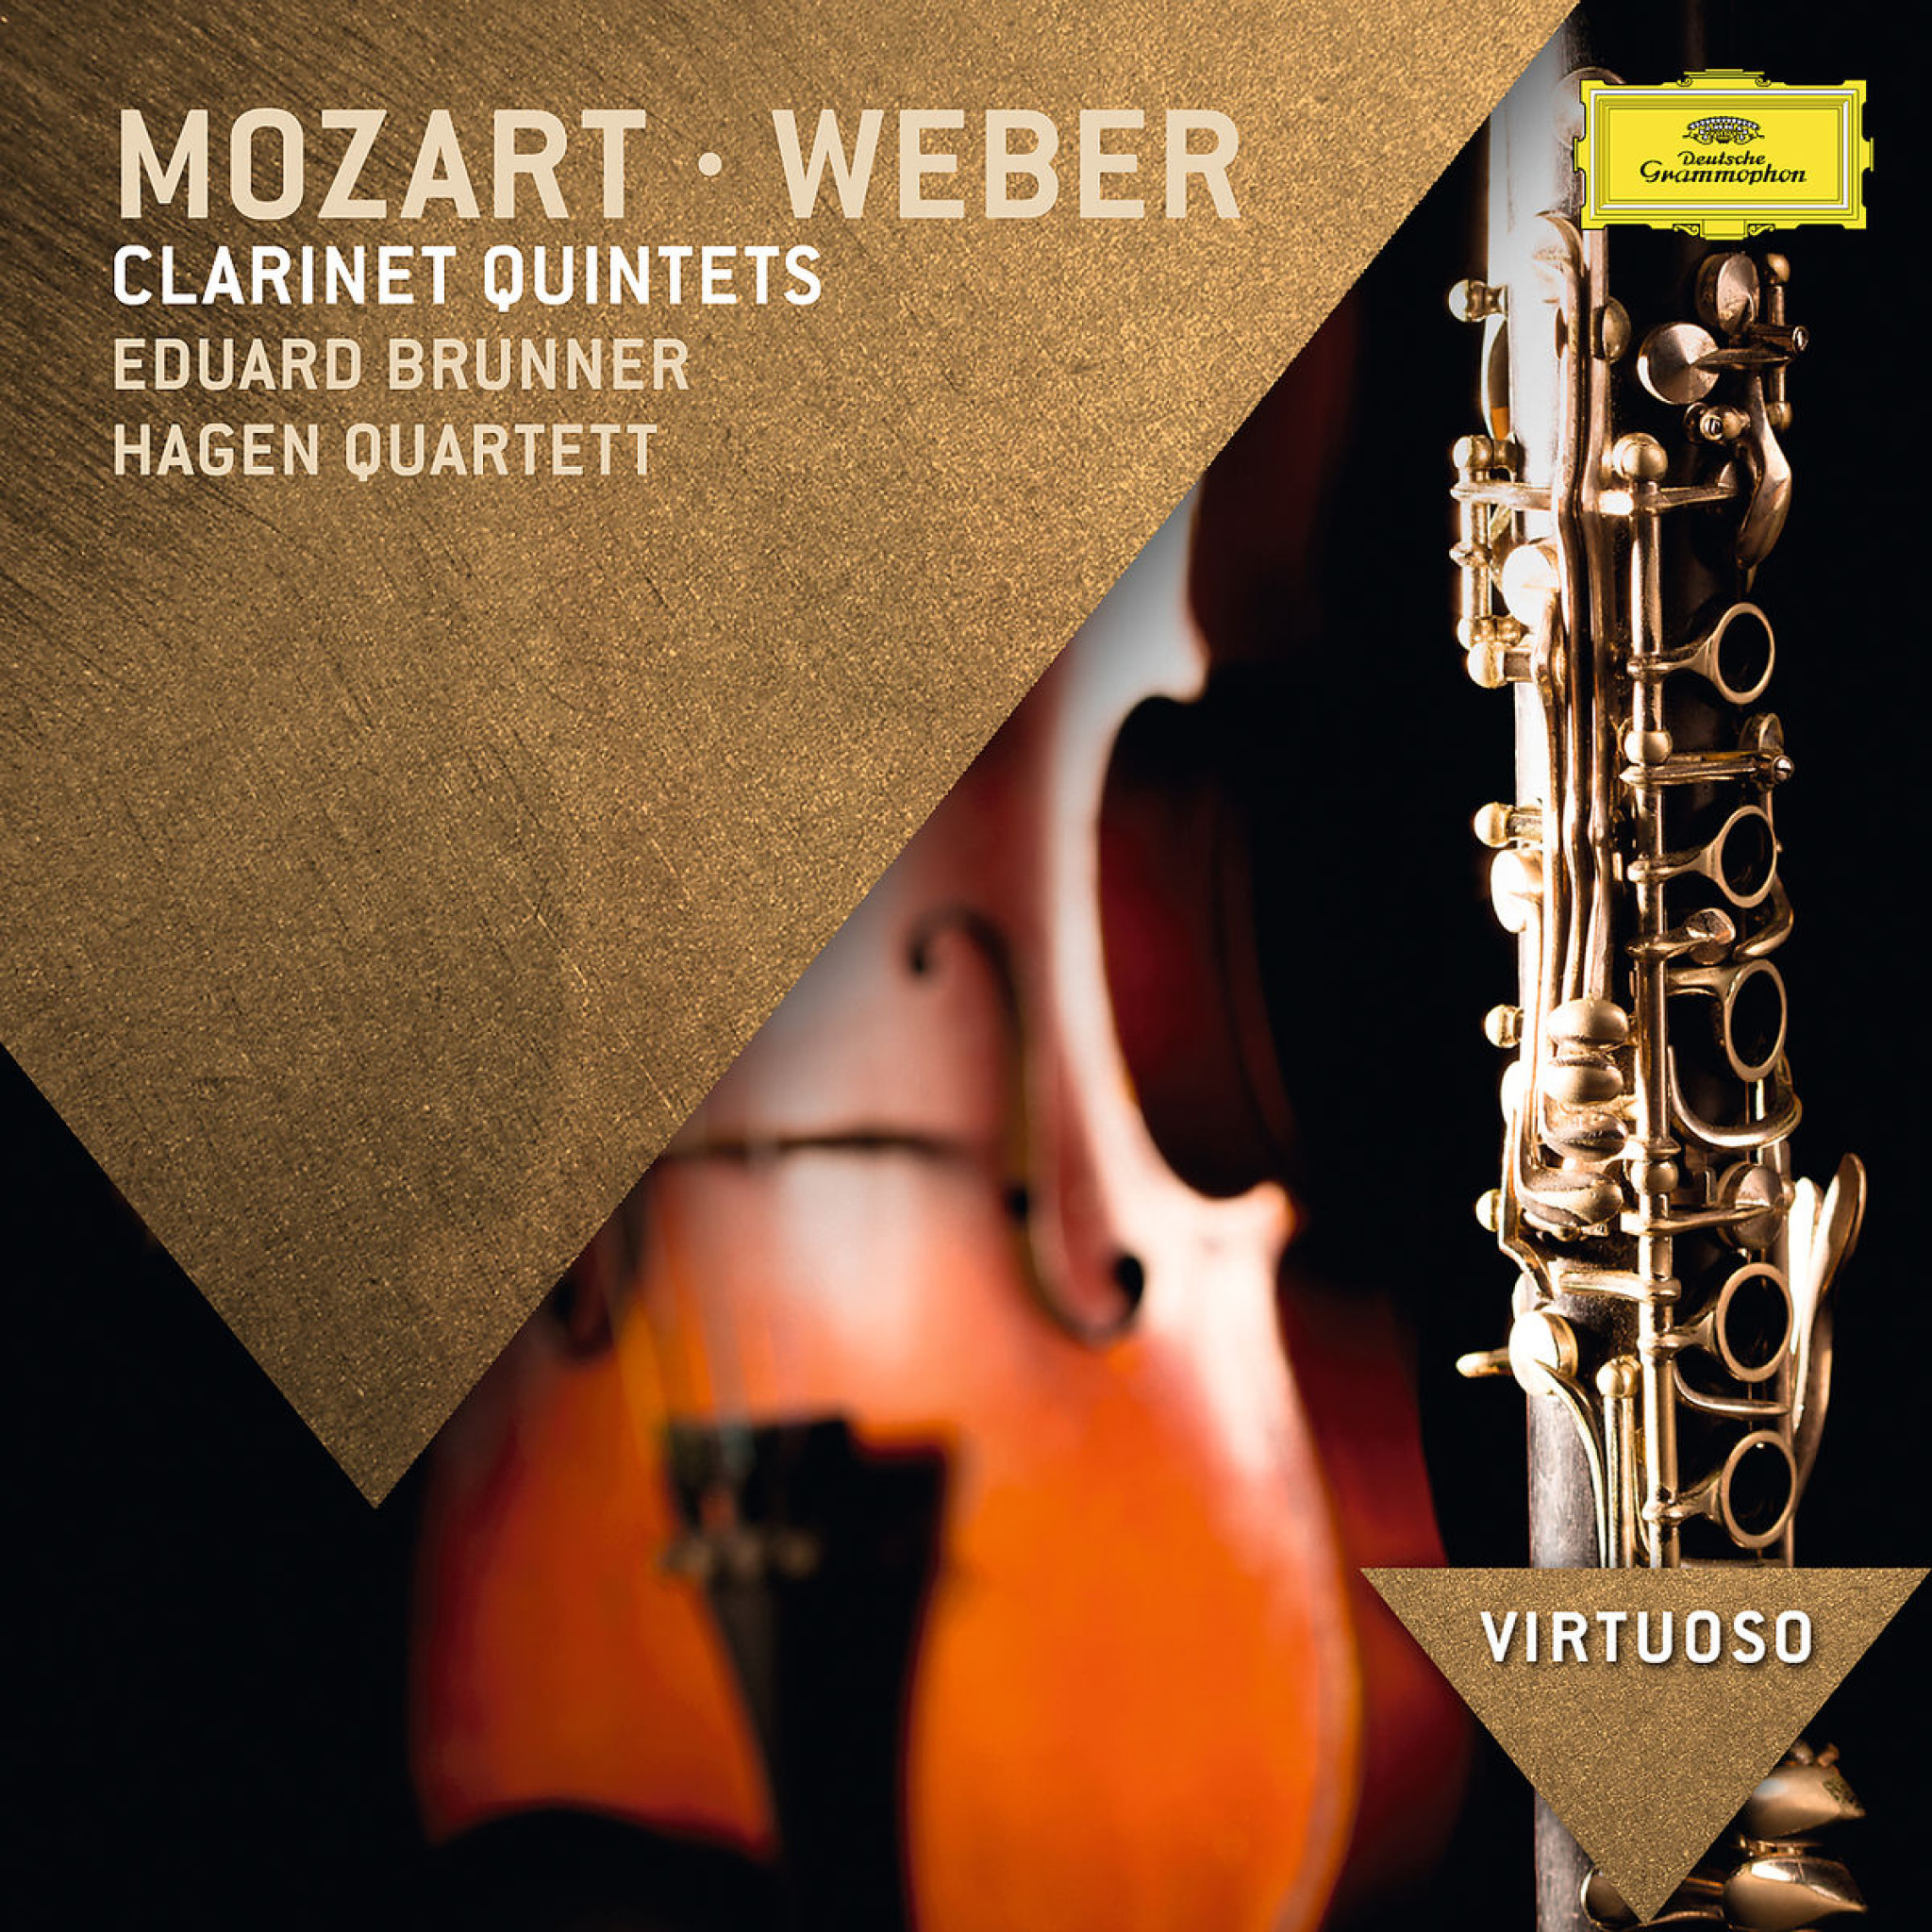 Mozart & Weber Clarinet Quintets